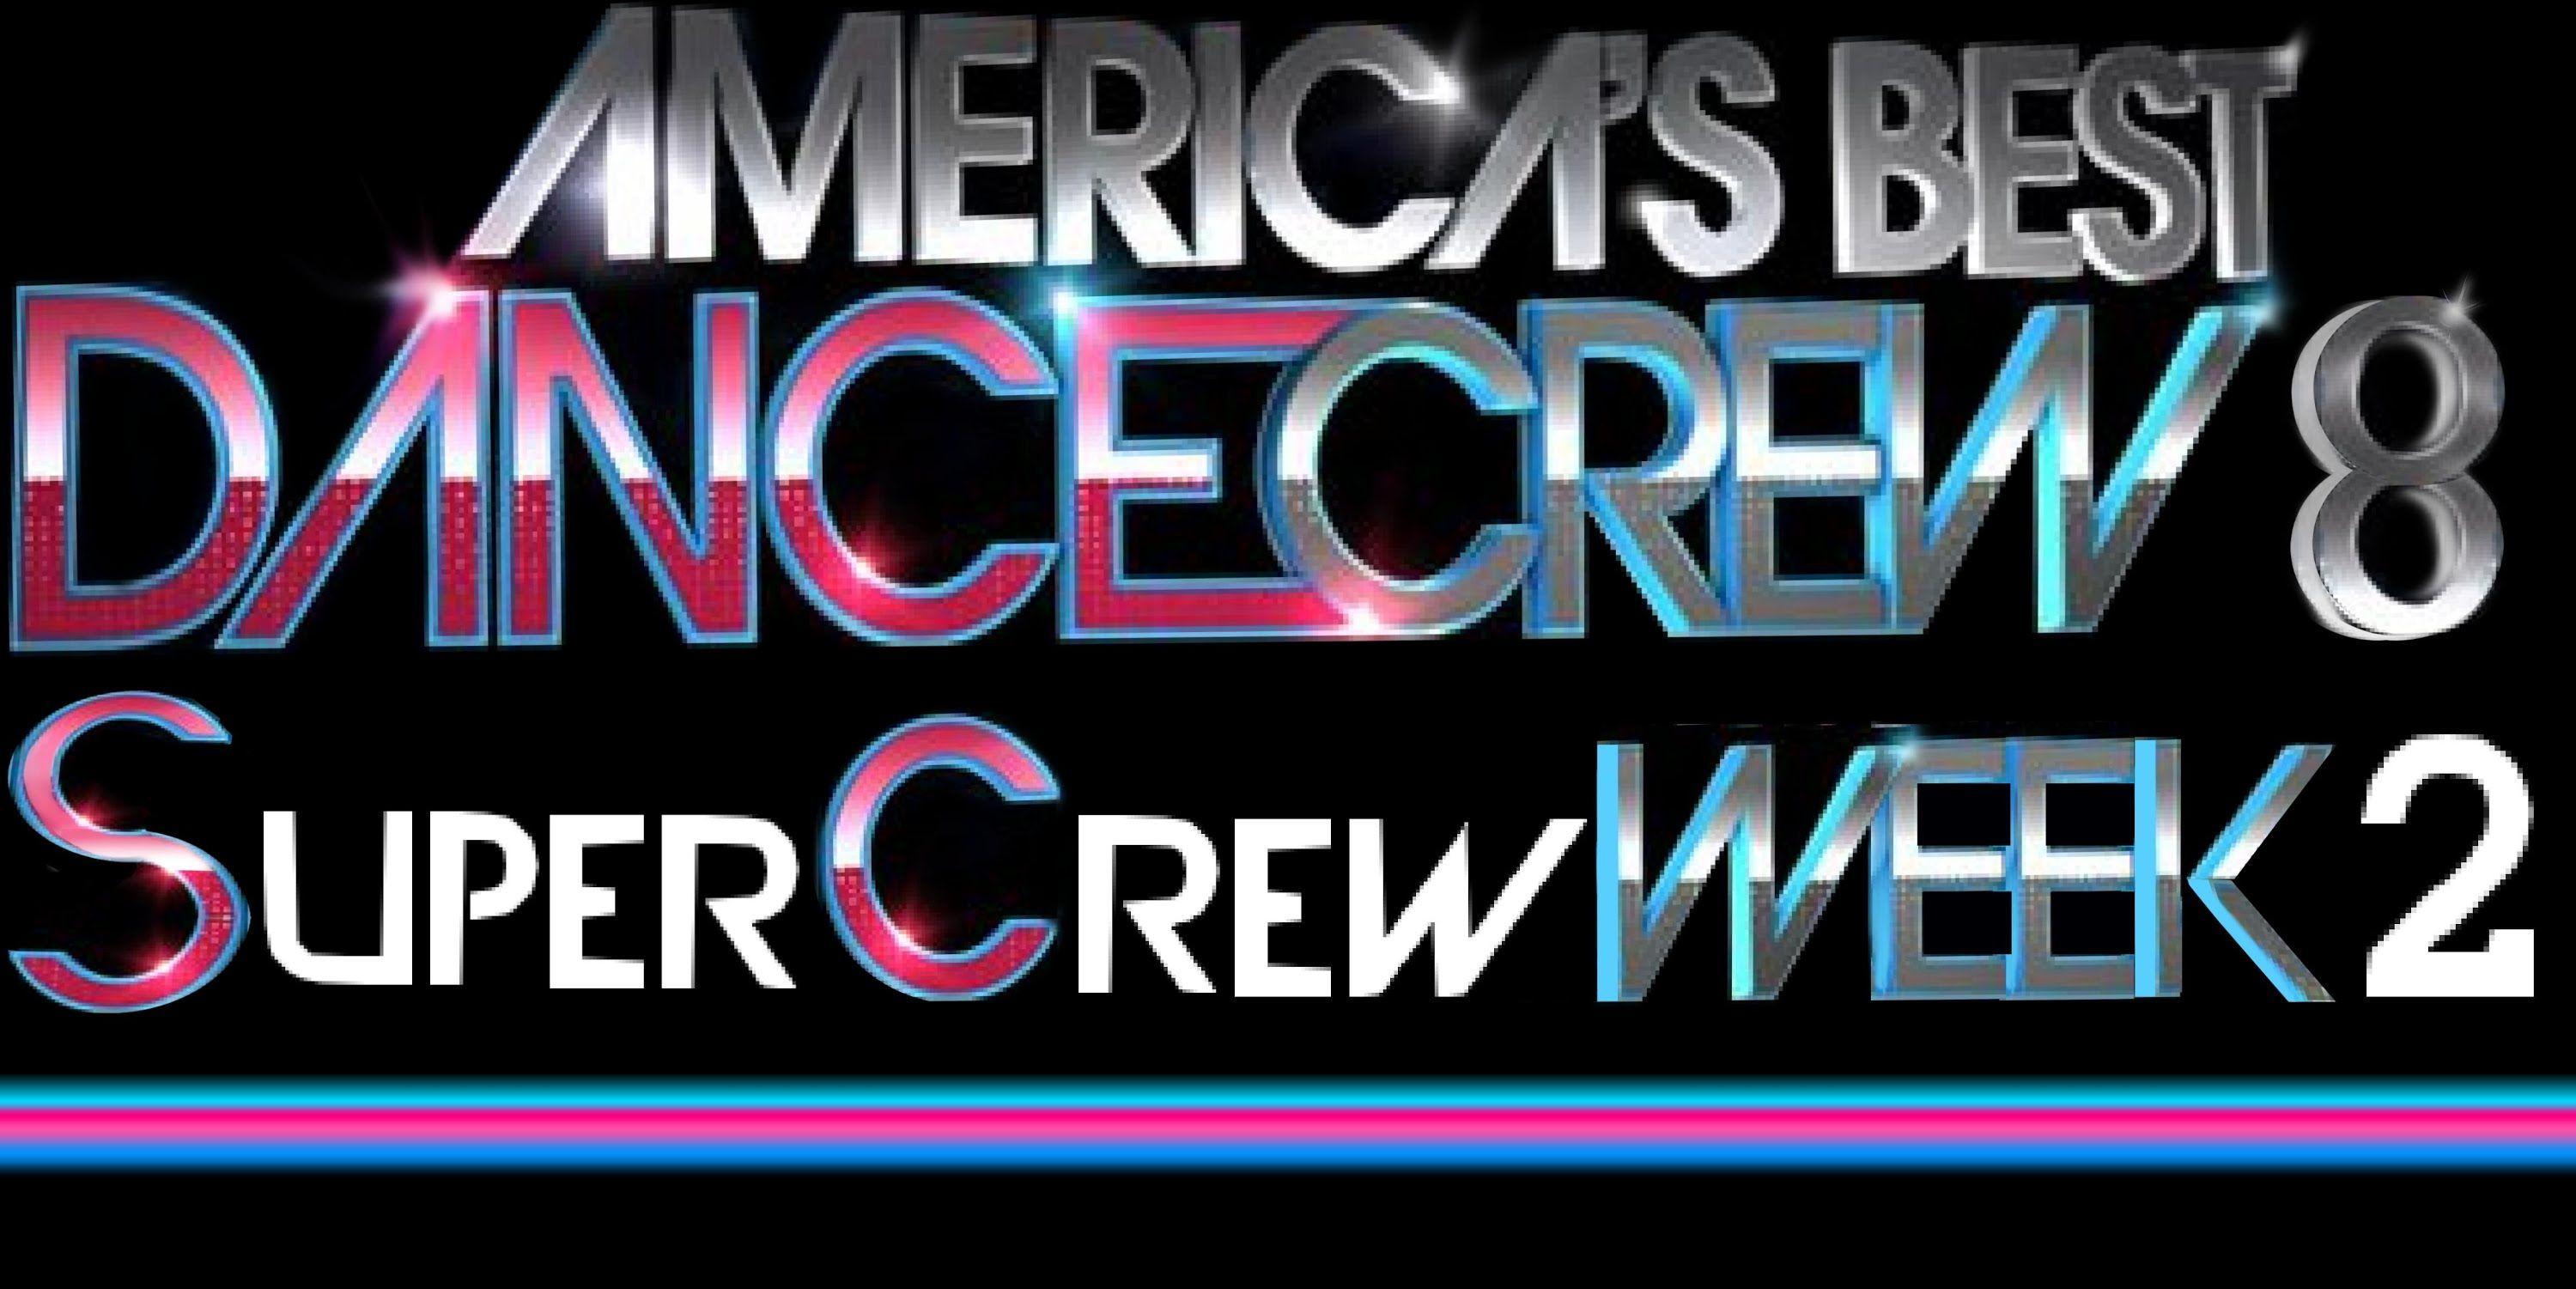 ABDC Logo - ABDC Season 8 Super Cr3w Week 2 HD. Dance. America's best dance